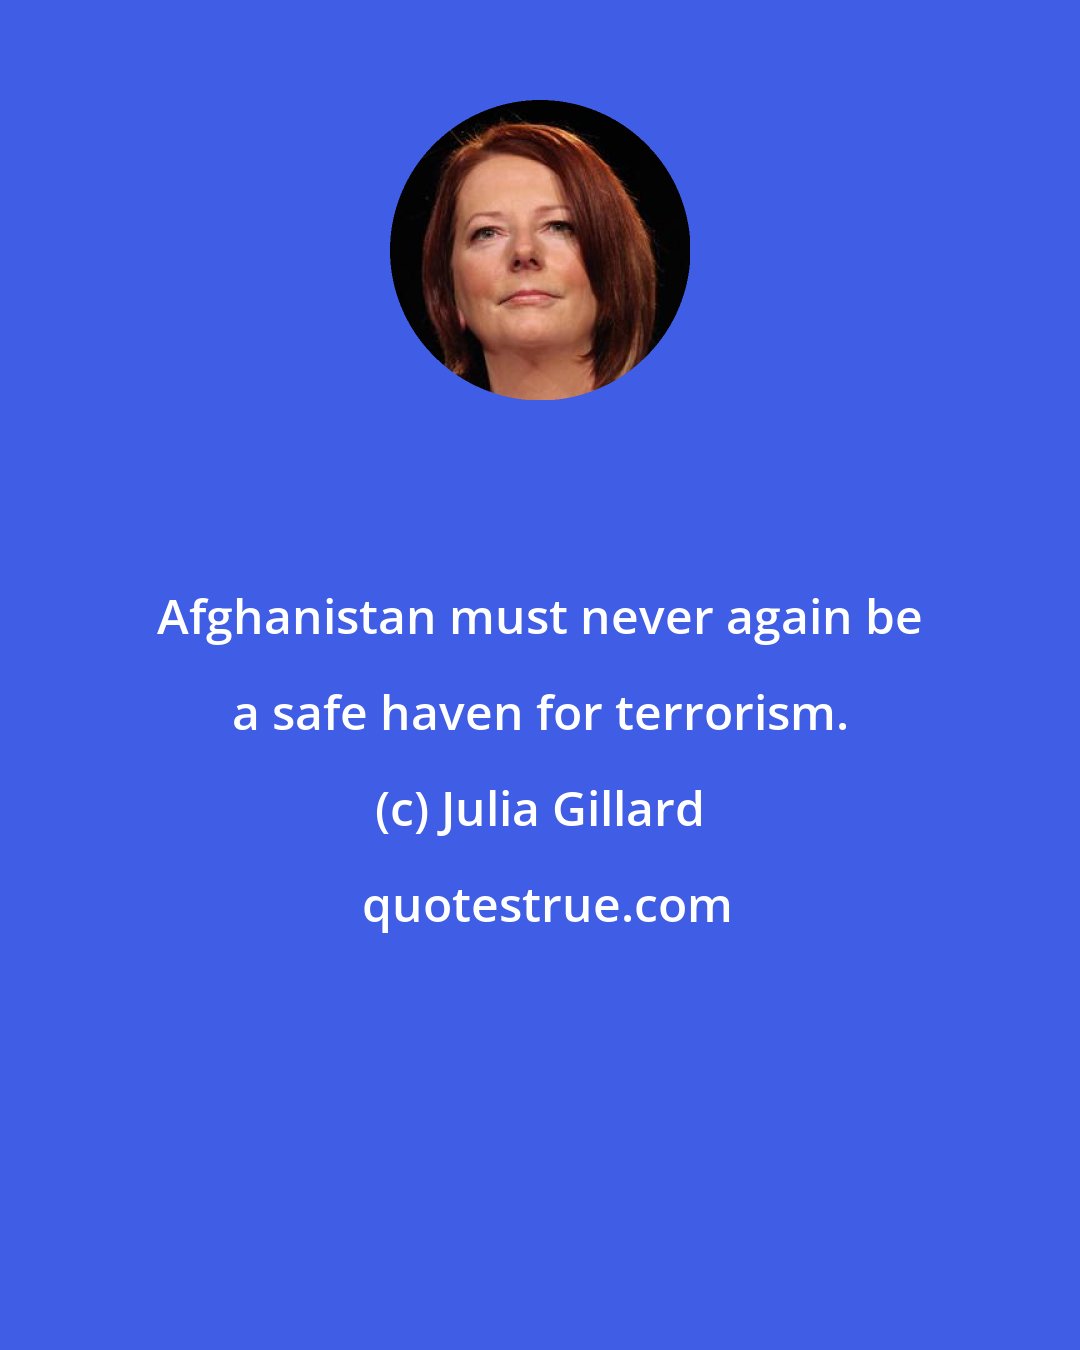 Julia Gillard: Afghanistan must never again be a safe haven for terrorism.